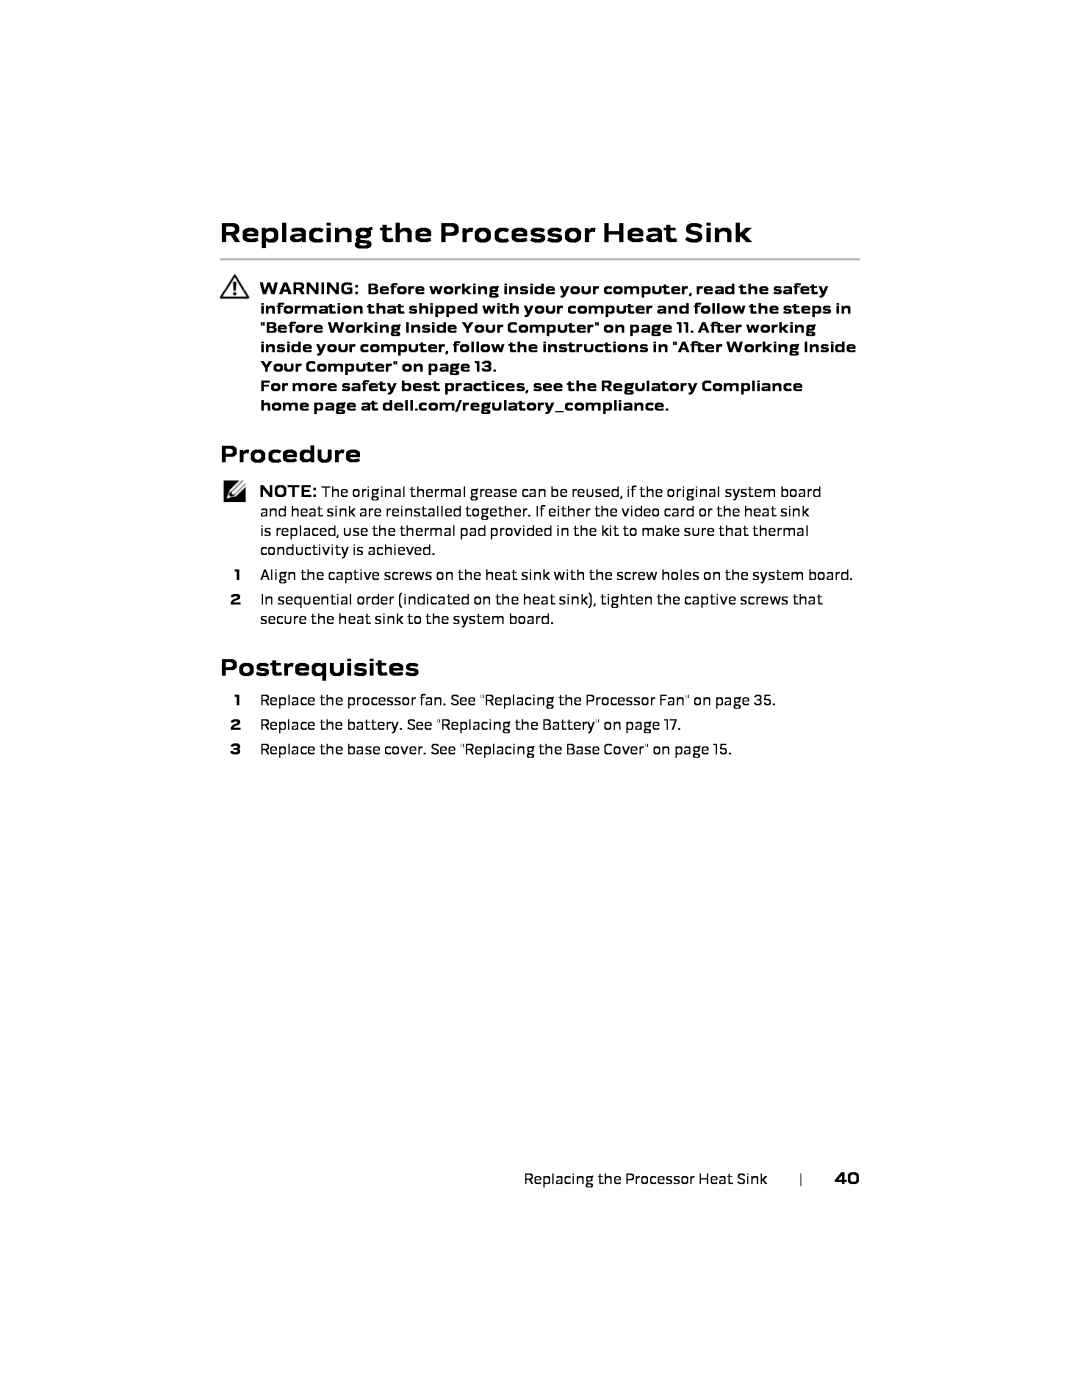 Alienware P18E, 17 R1 owner manual Replacing the Processor Heat Sink, Procedure, Postrequisites 